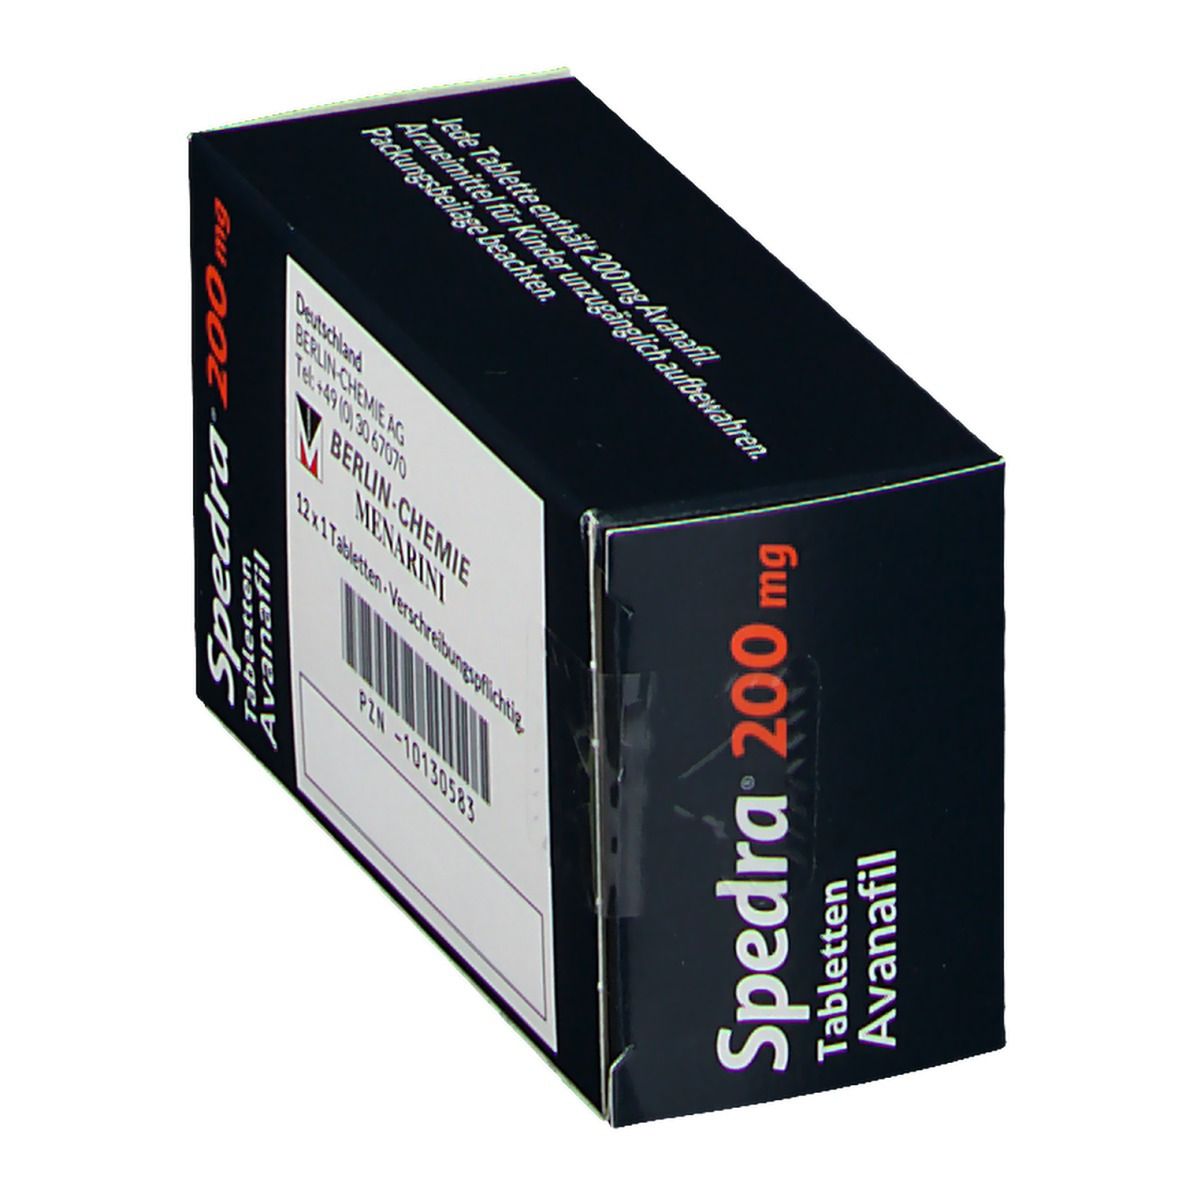 Spedra® 200 mg